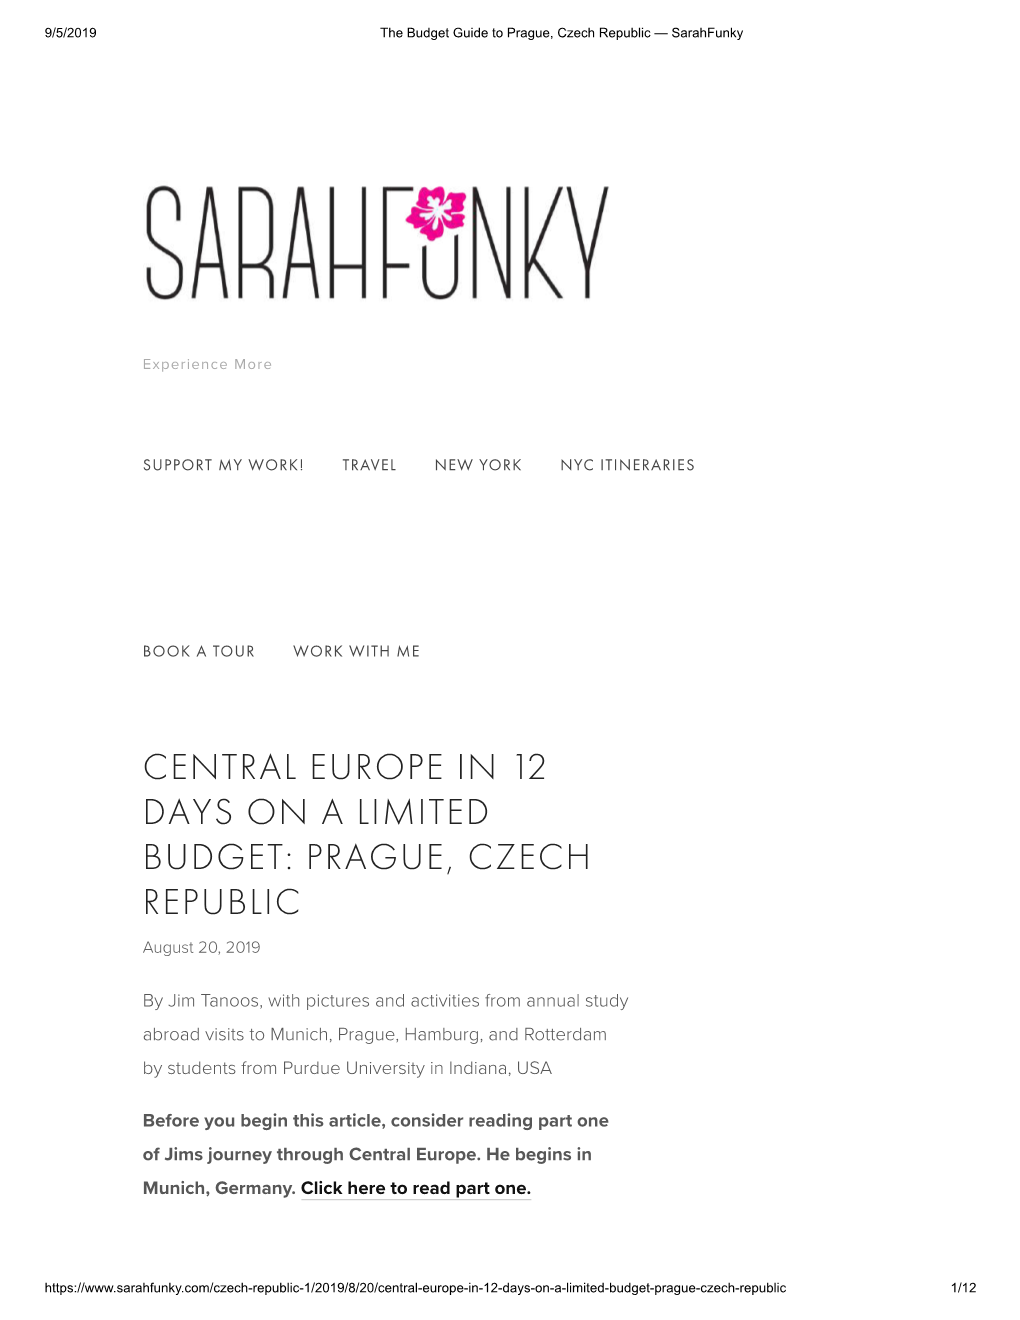 Prague, Czech Republic — Sarahfunky